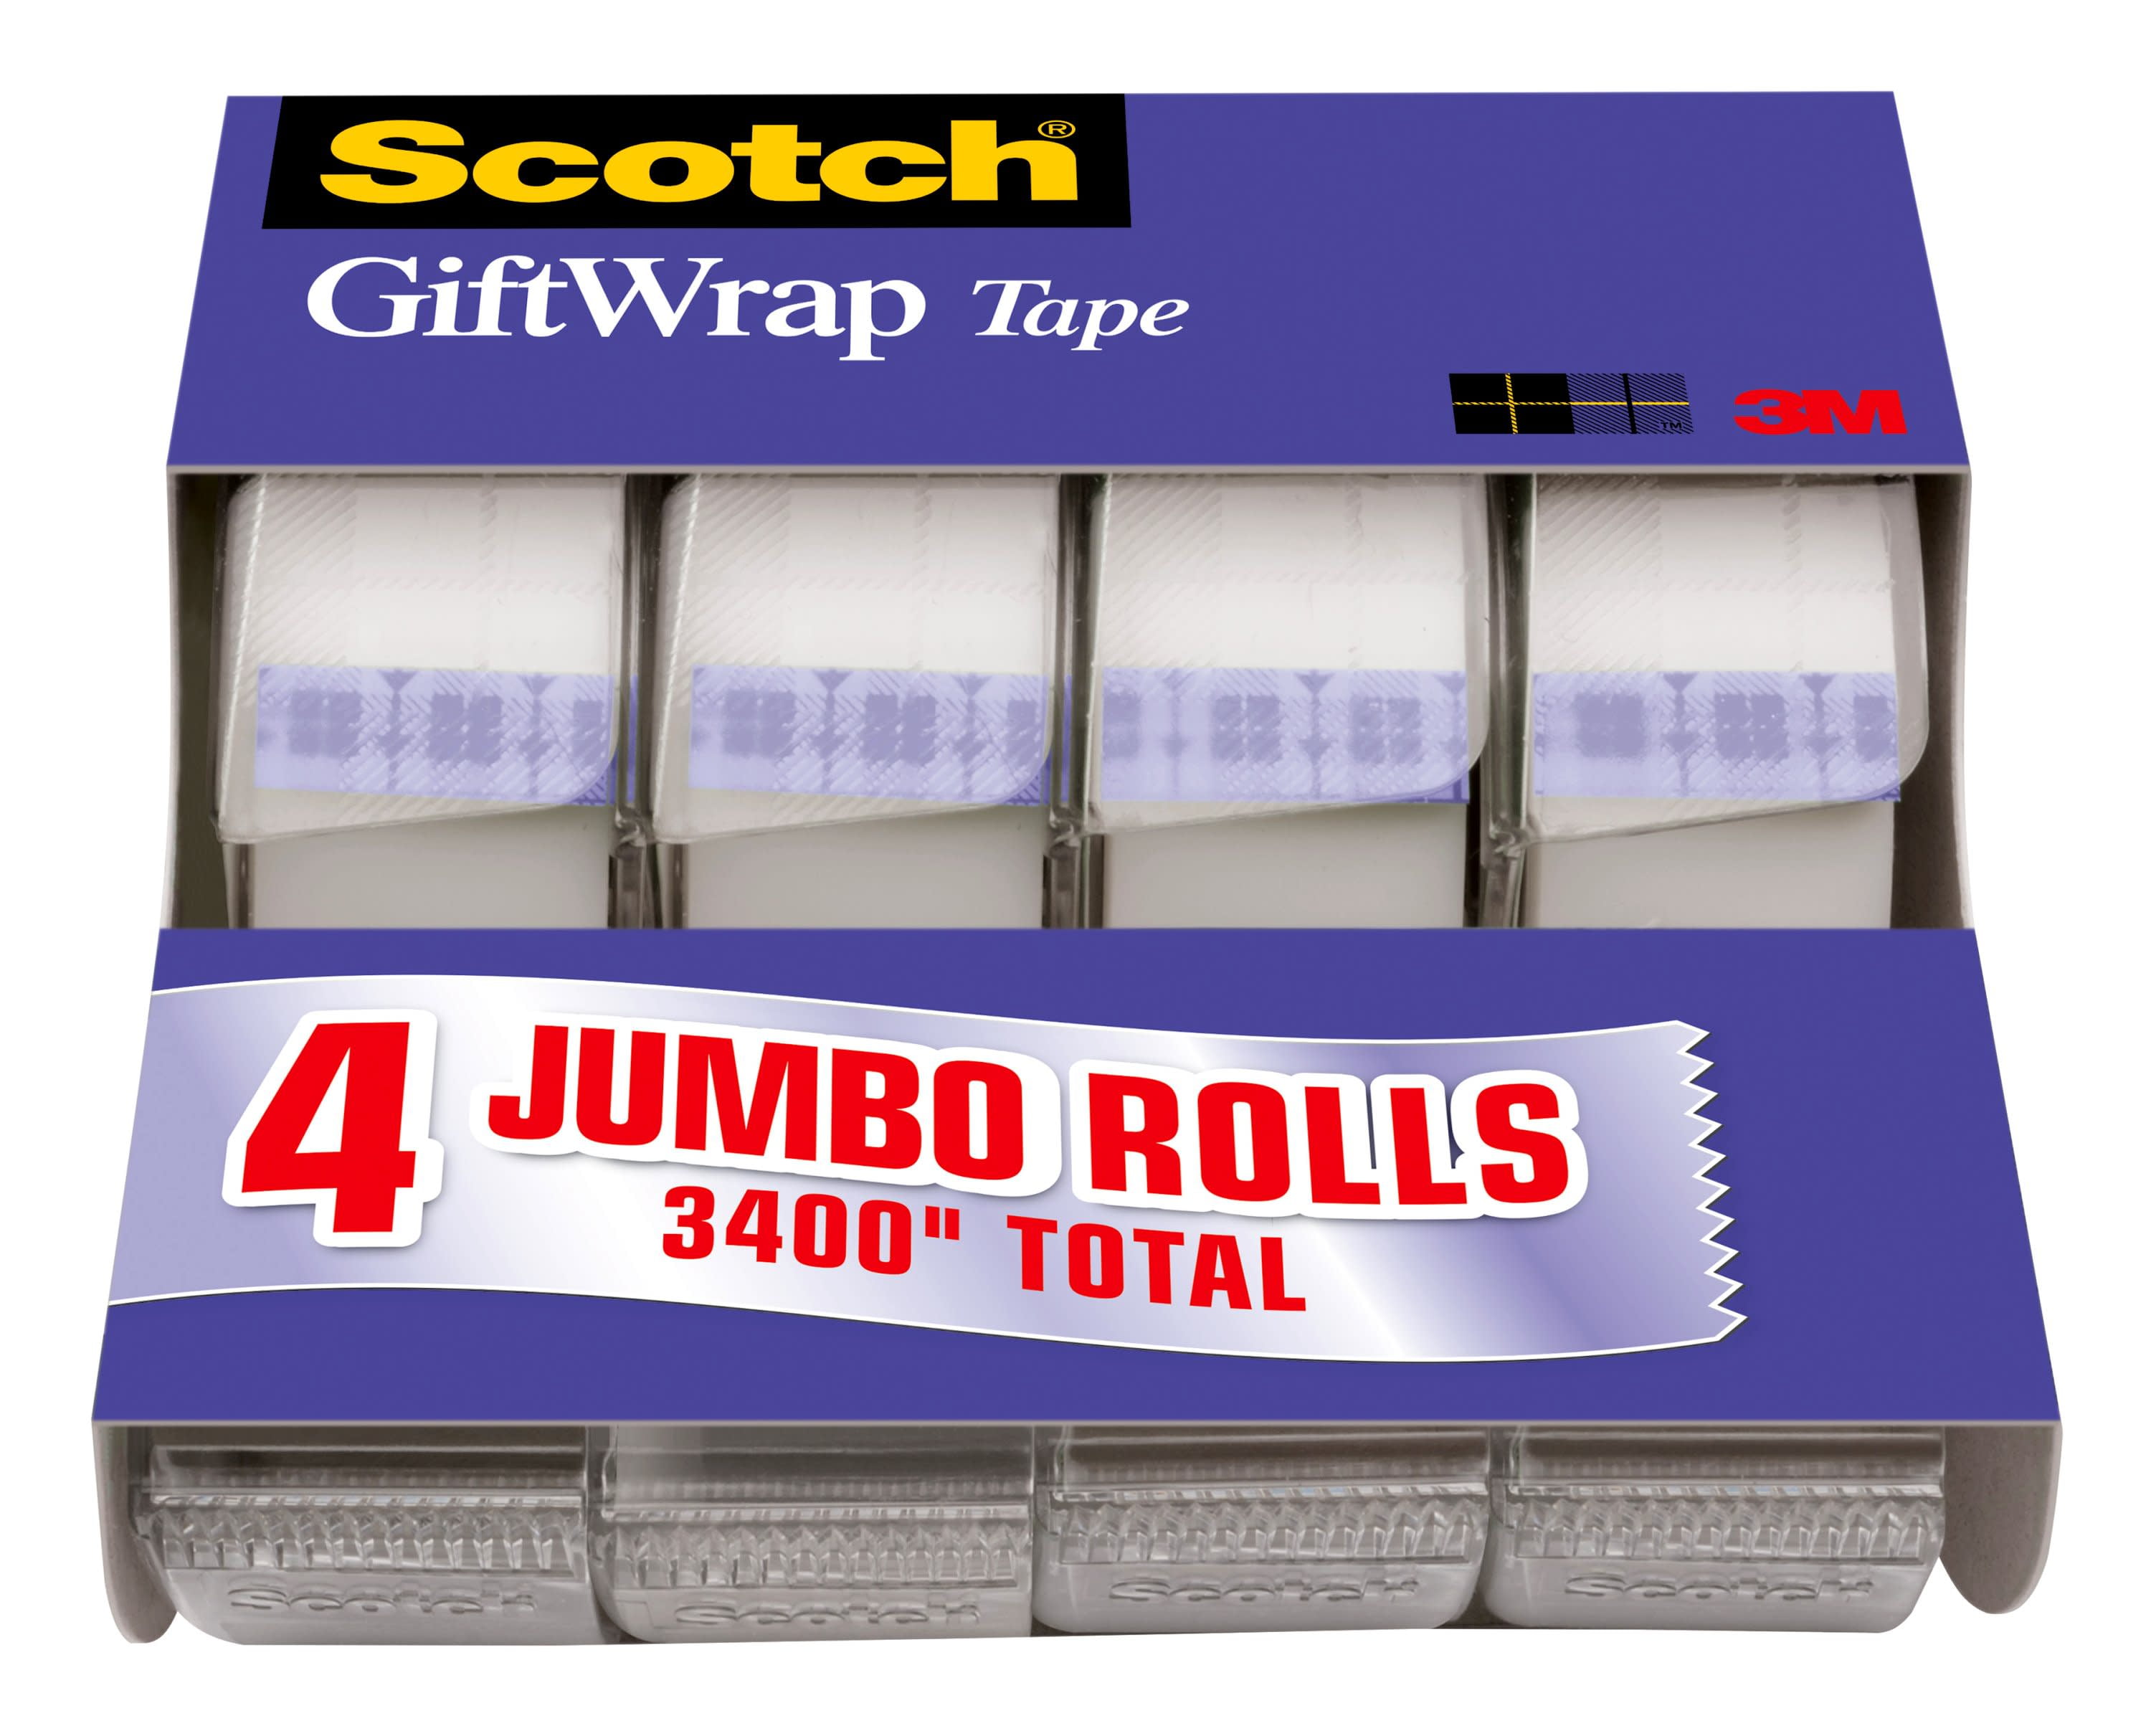 6 x Rolls Assorted Scotch Tape 3 x Magic Tape & 3 x Giftwrap Tape BRAND NEW 